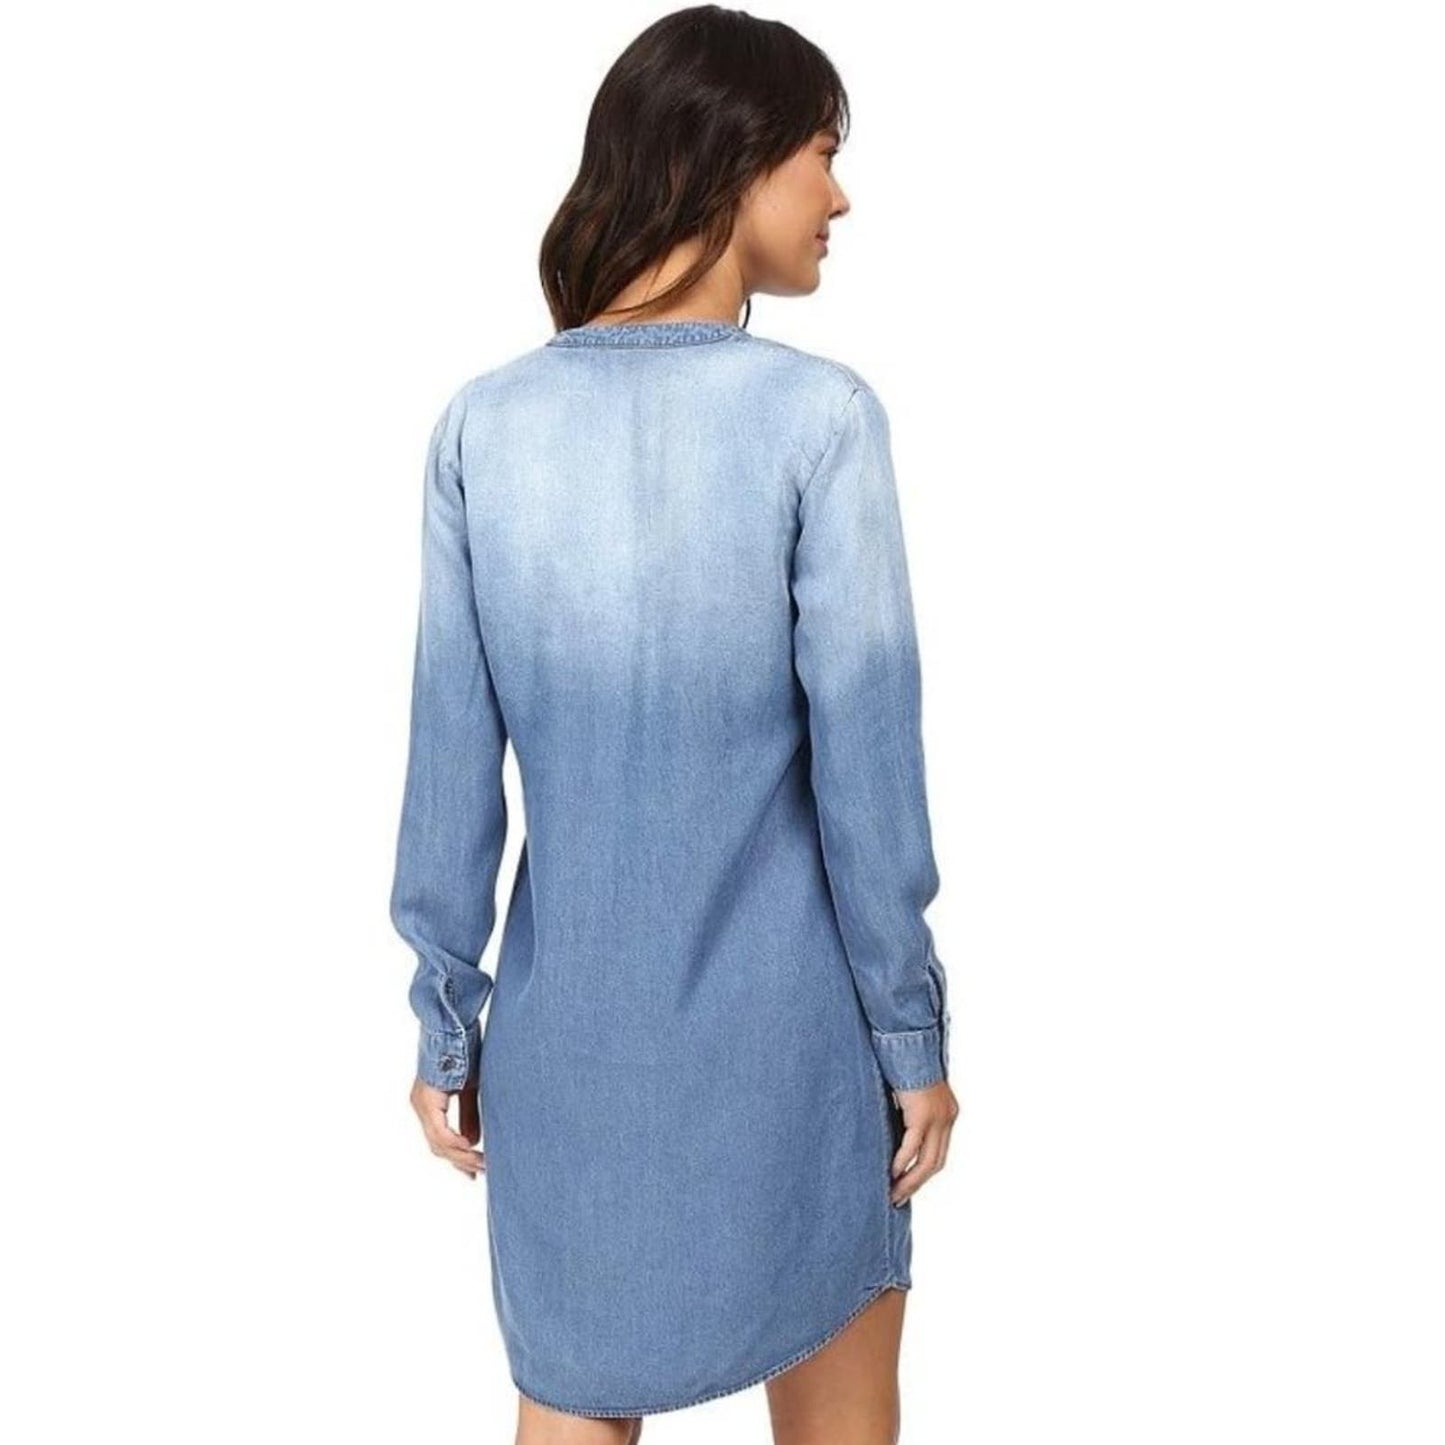 Splendid Adelise Lace-up Chambray Blue Shirt Dress Shirtdress NWT Size S…